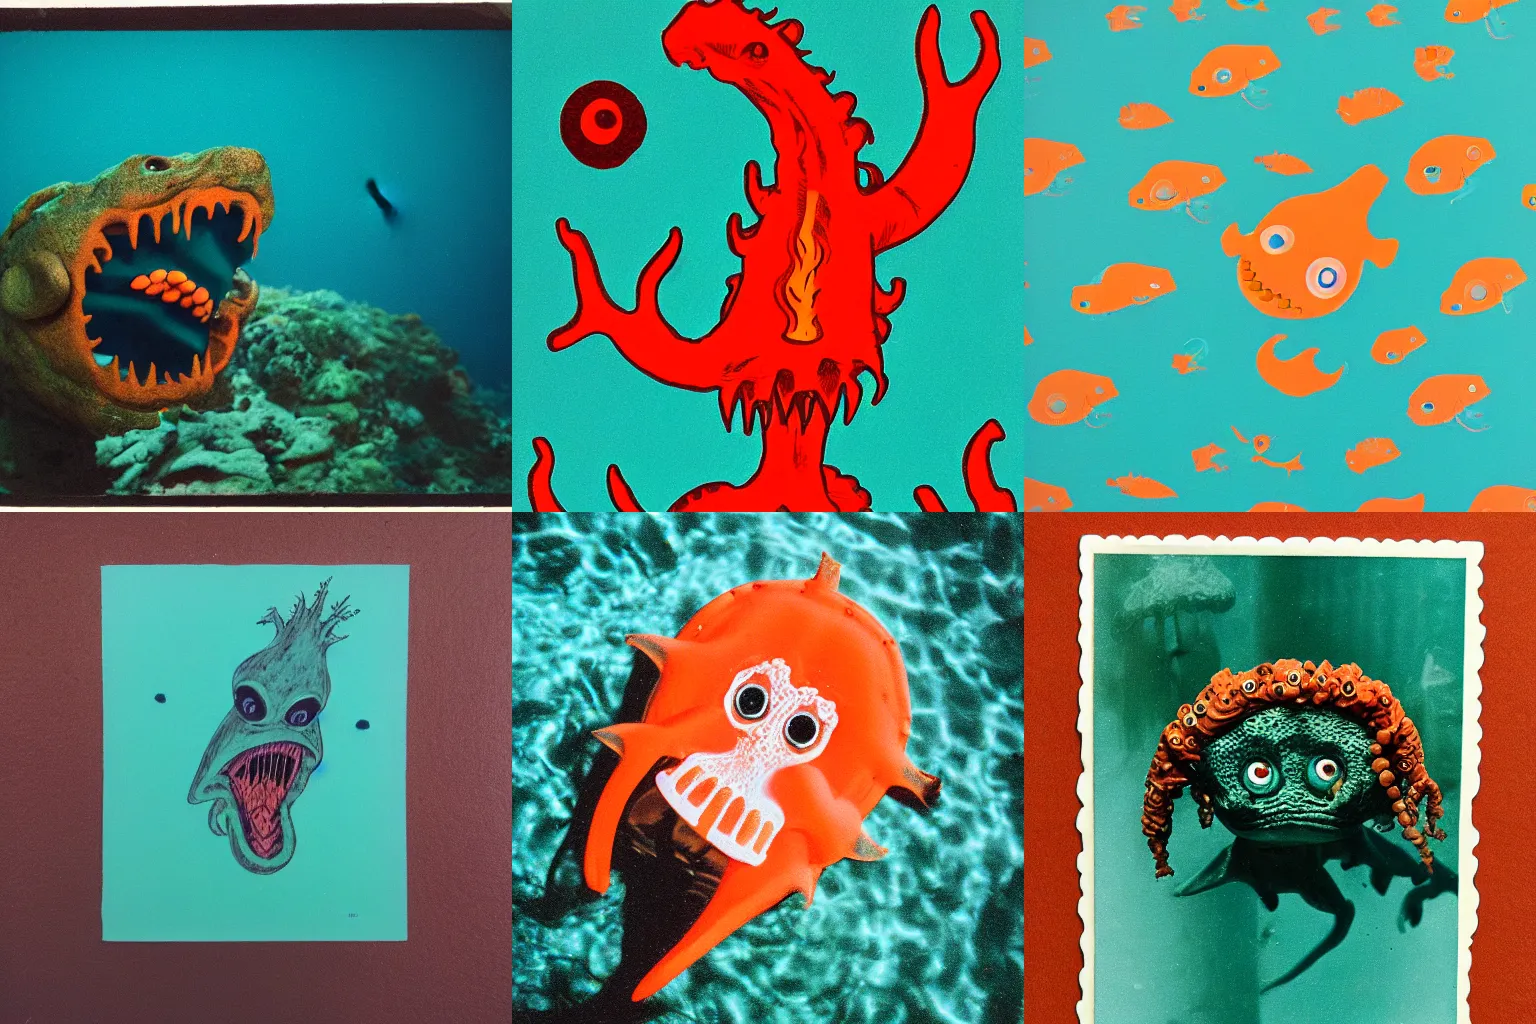 Prompt: underwater sea monster, 35mm camera, teal and orange, horror